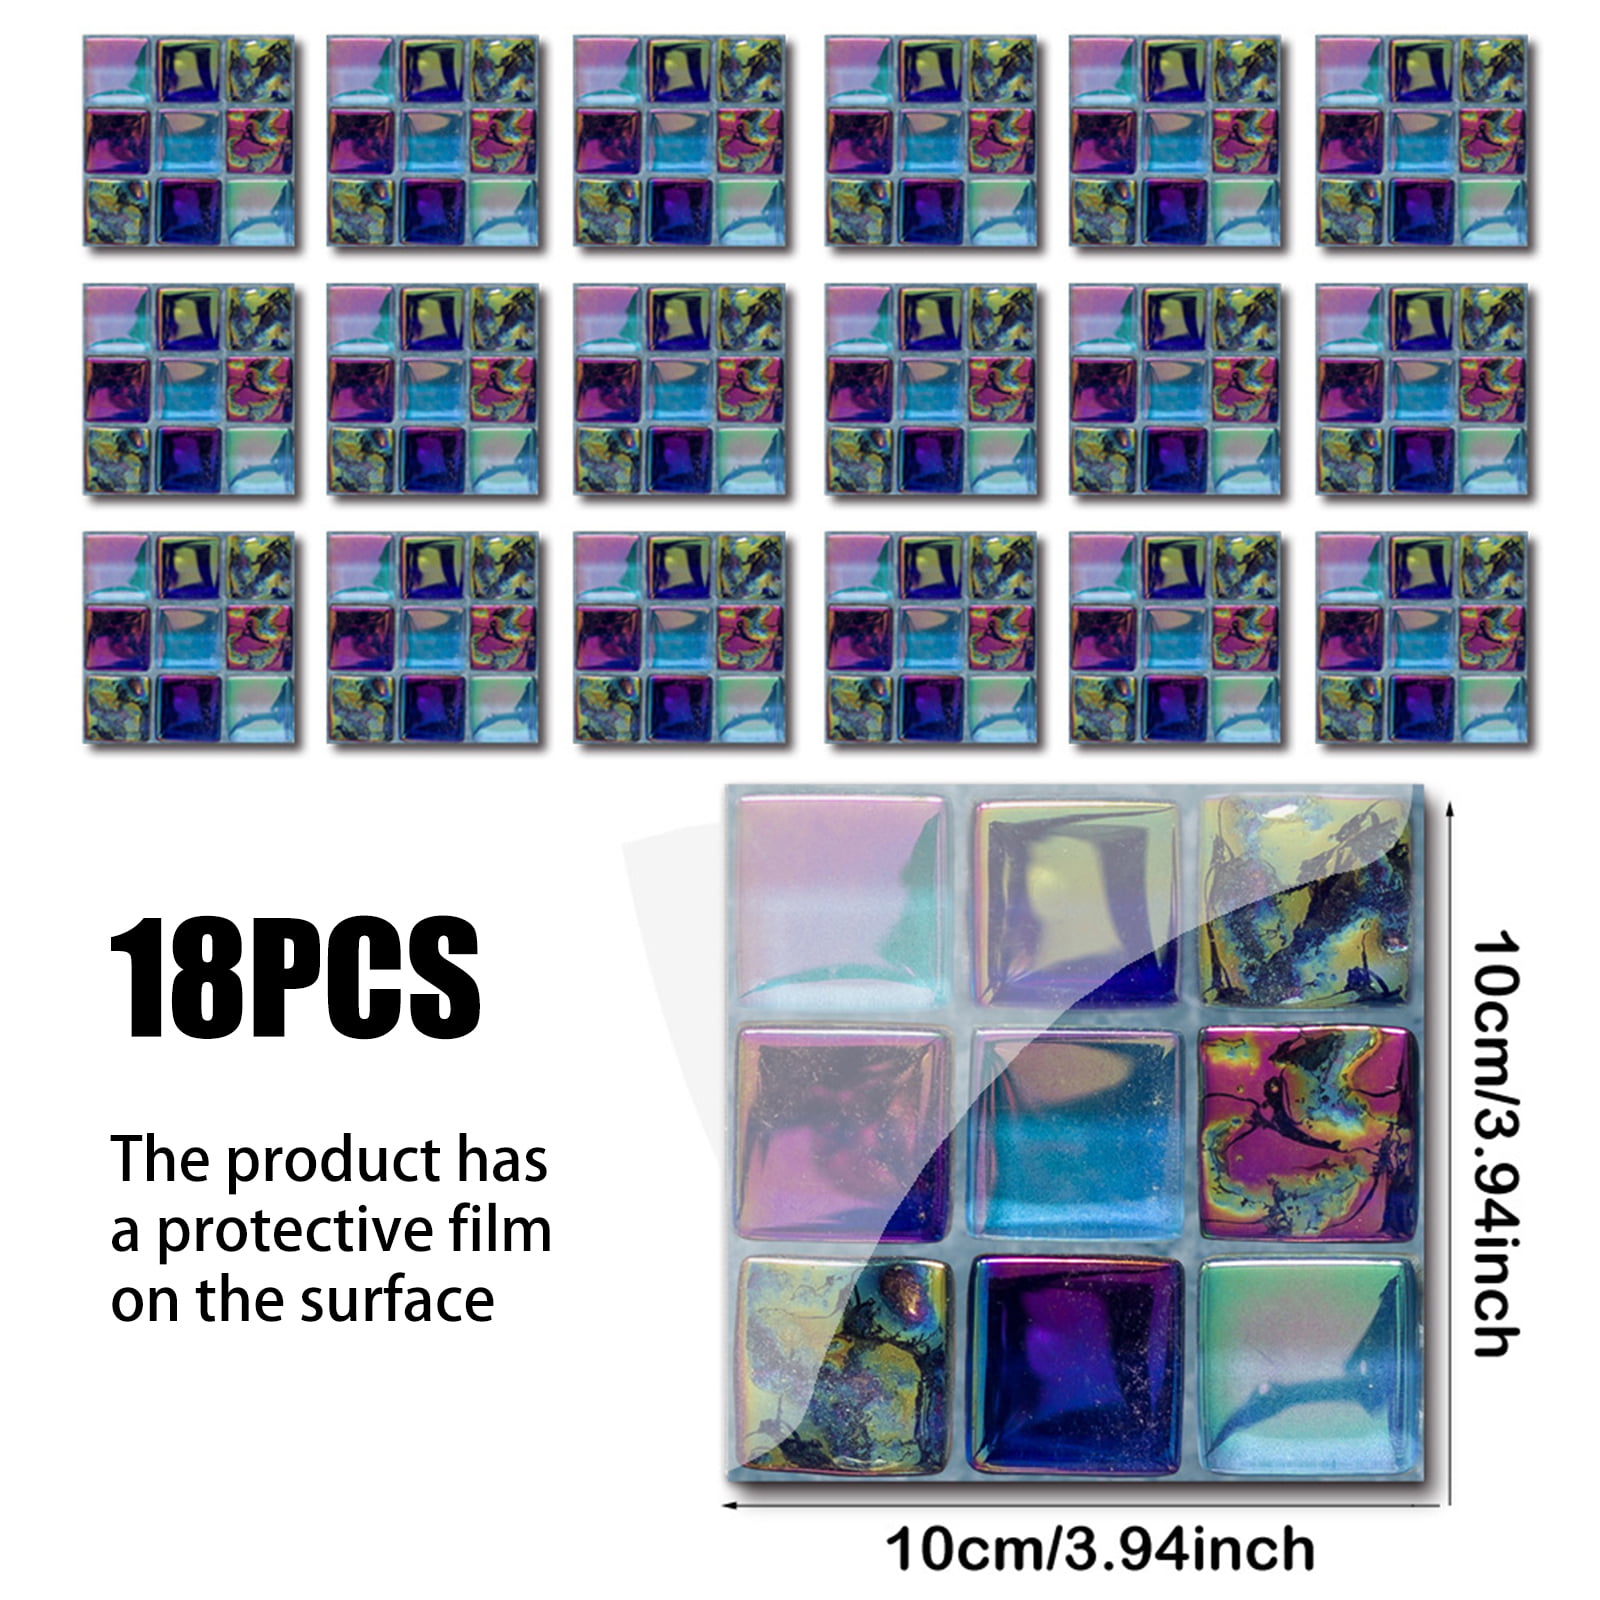 18PCS 3D Mosaic Wall Sticker Self Adhesive Tile Stickers Bathroom Kitchen Decor